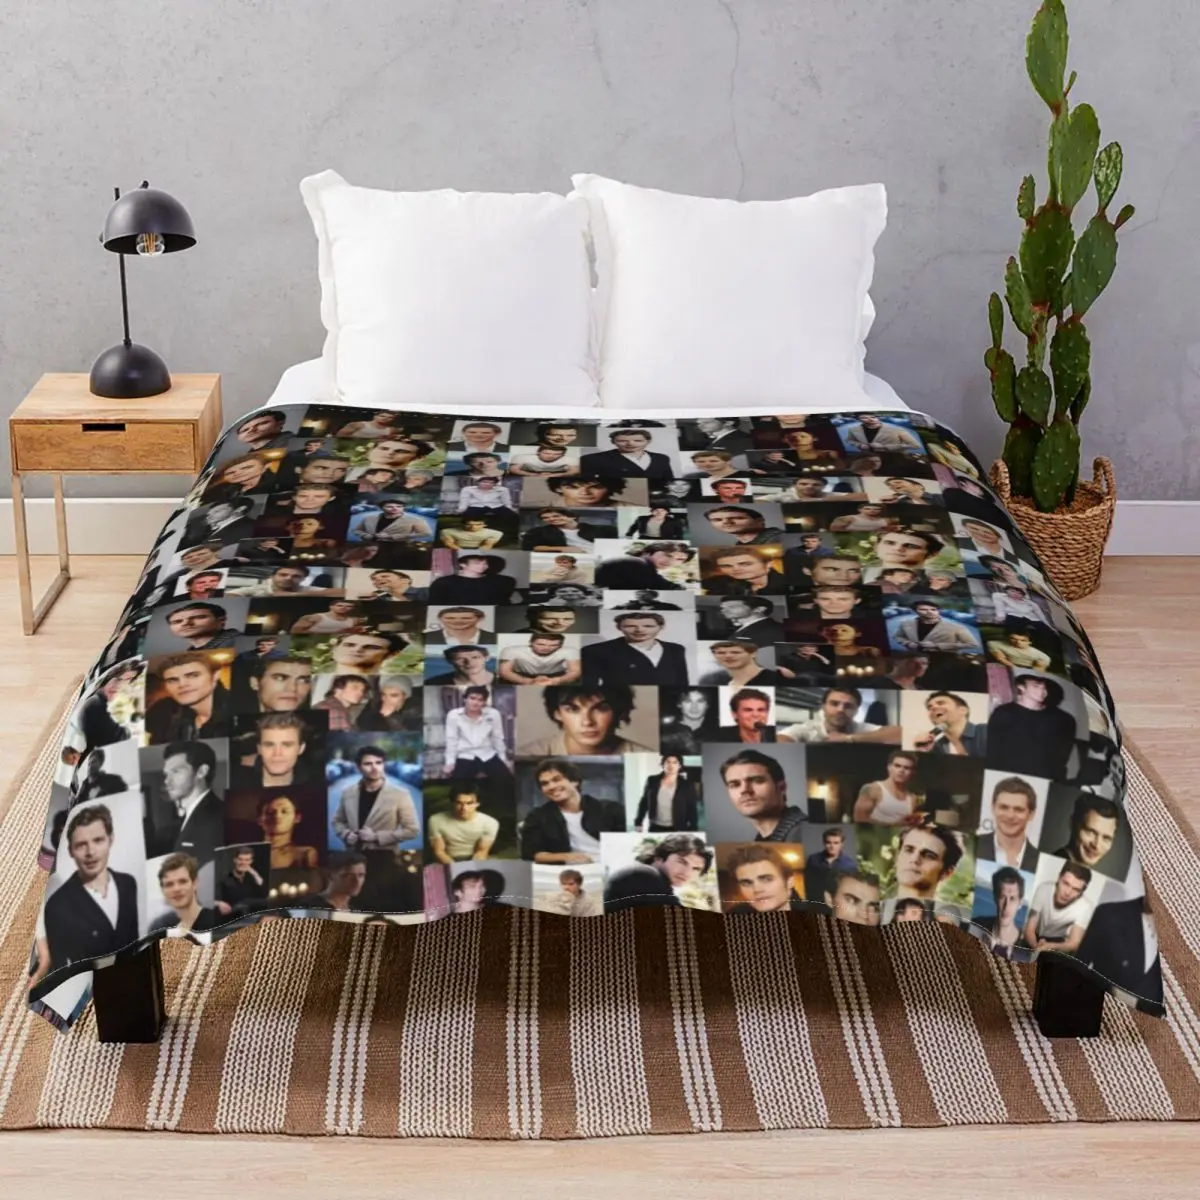 IanPaul And Joseph Blanket Fleece Spring/Autumn Portable Throw Blankets for Bed Sofa Travel Office